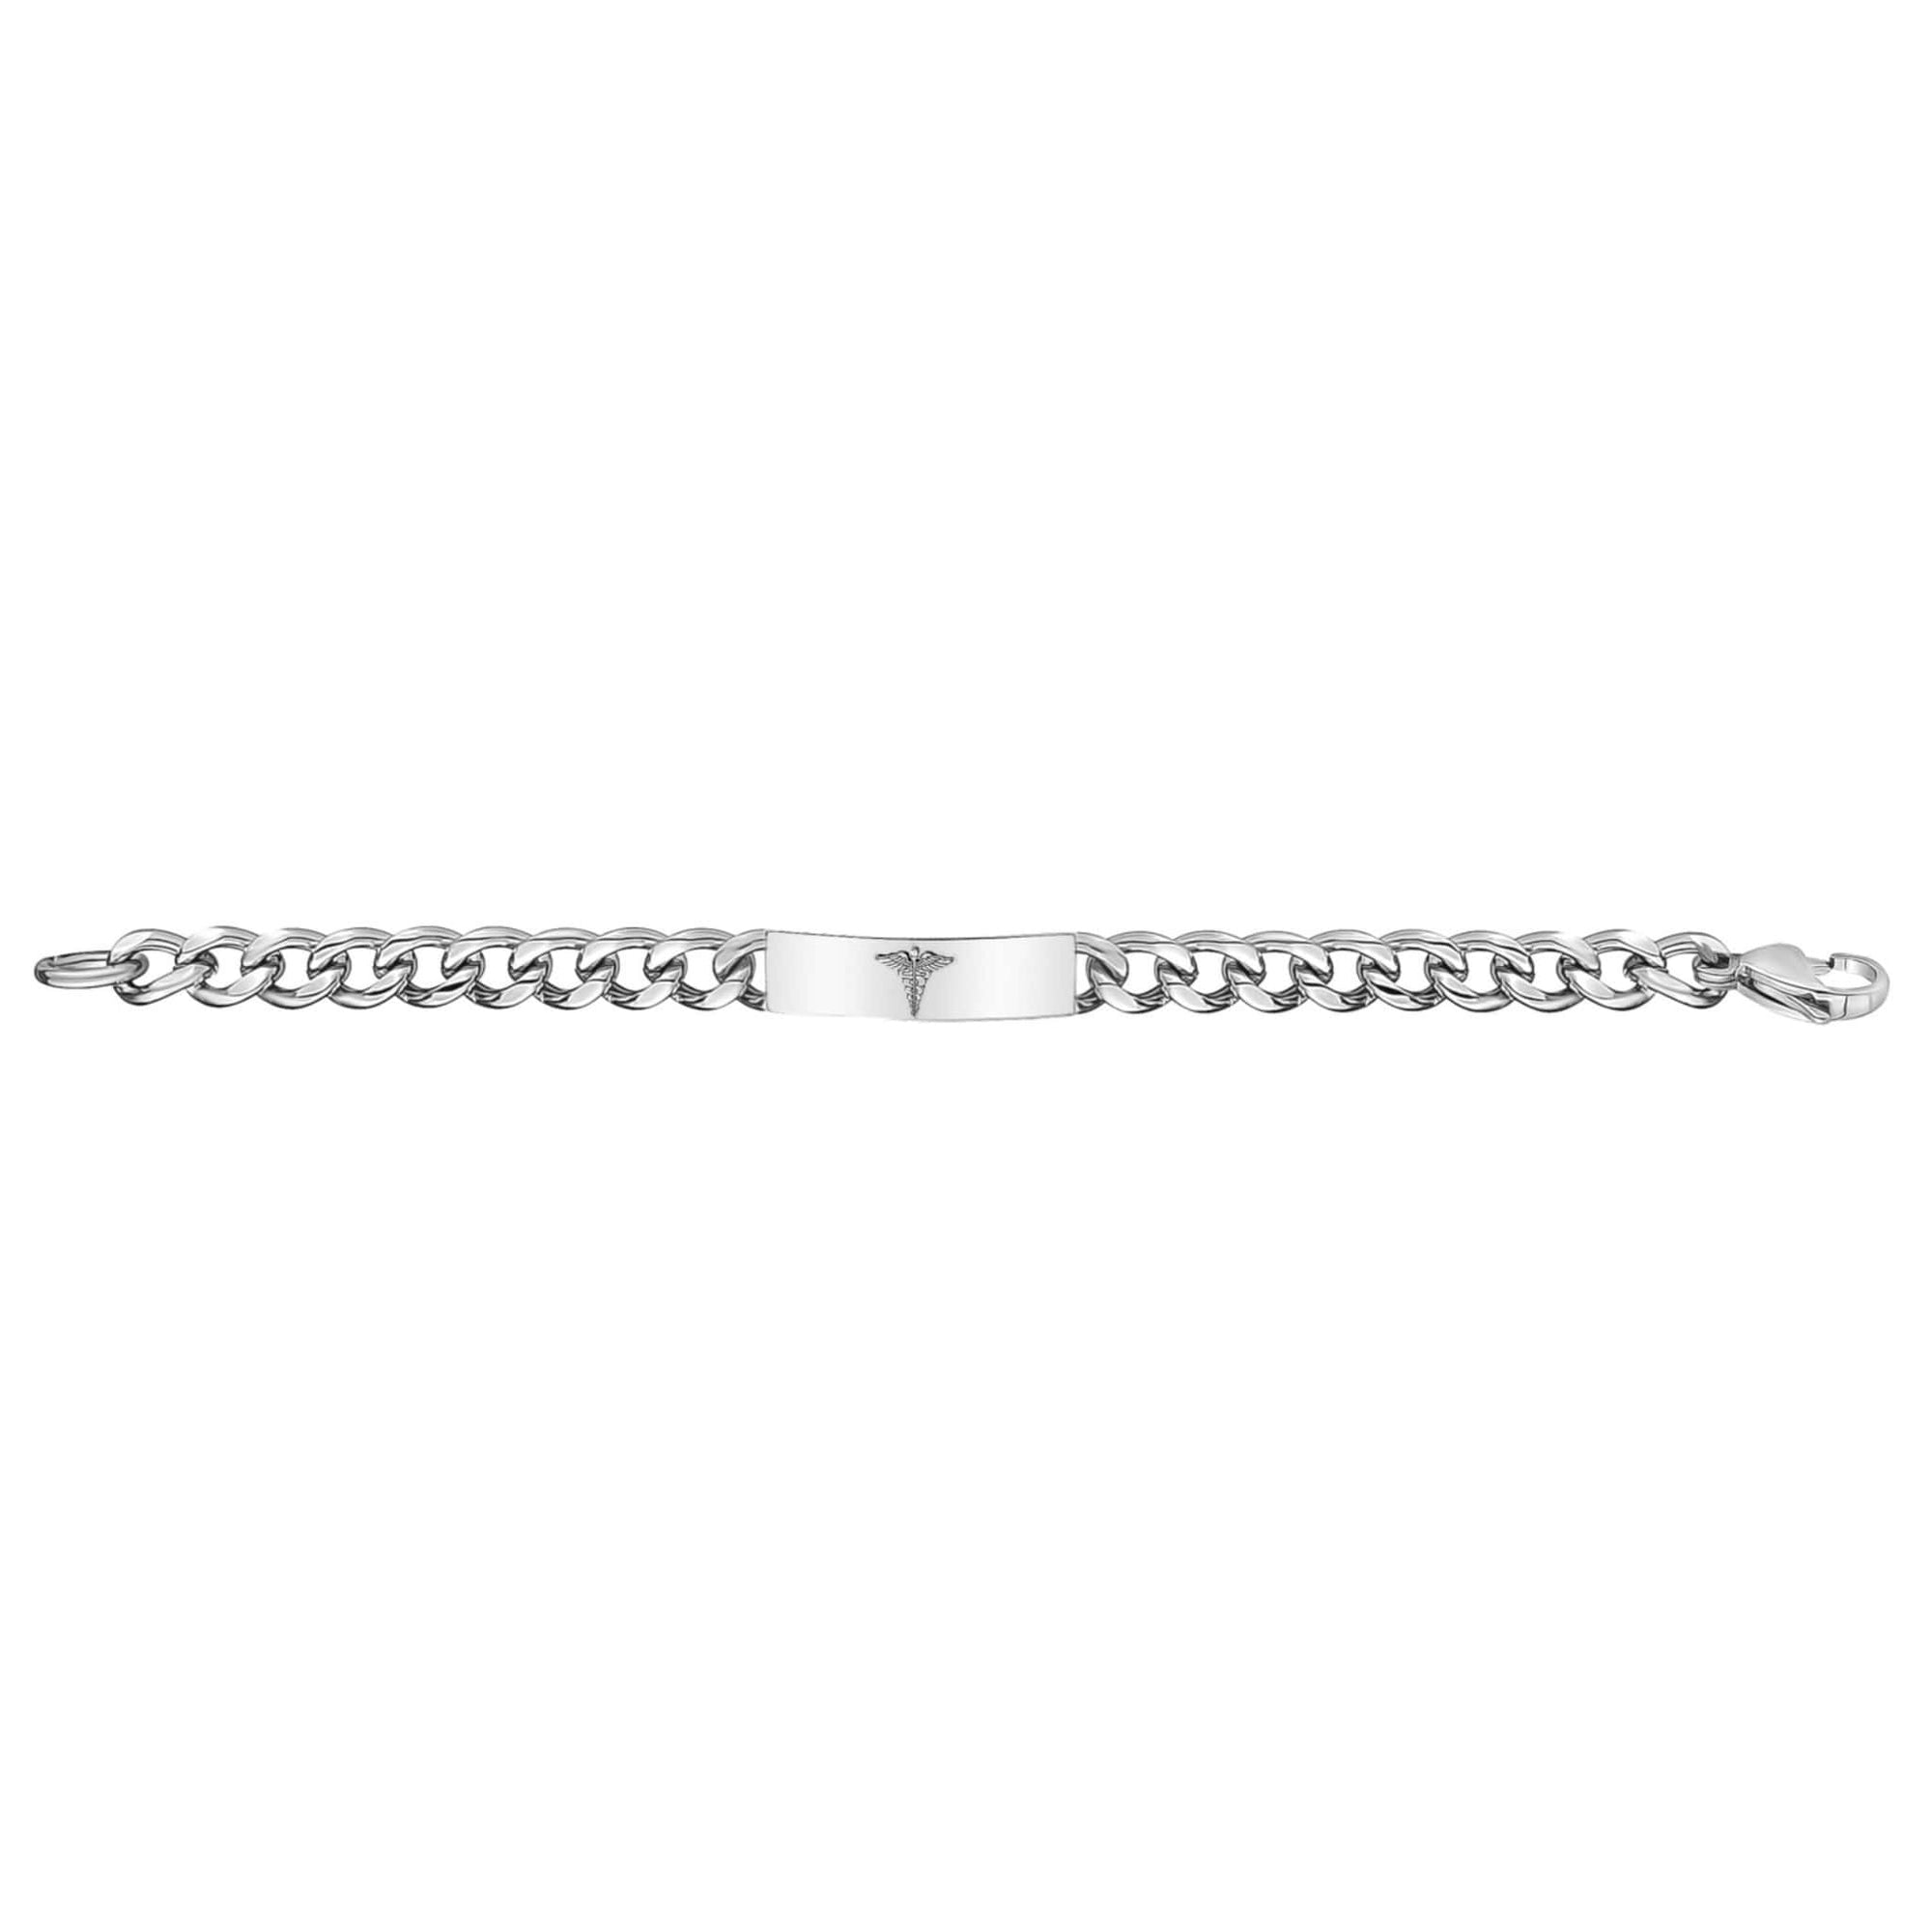 12mm Steel Curb Link Medical ID Bracelet at Arman's Jewellers